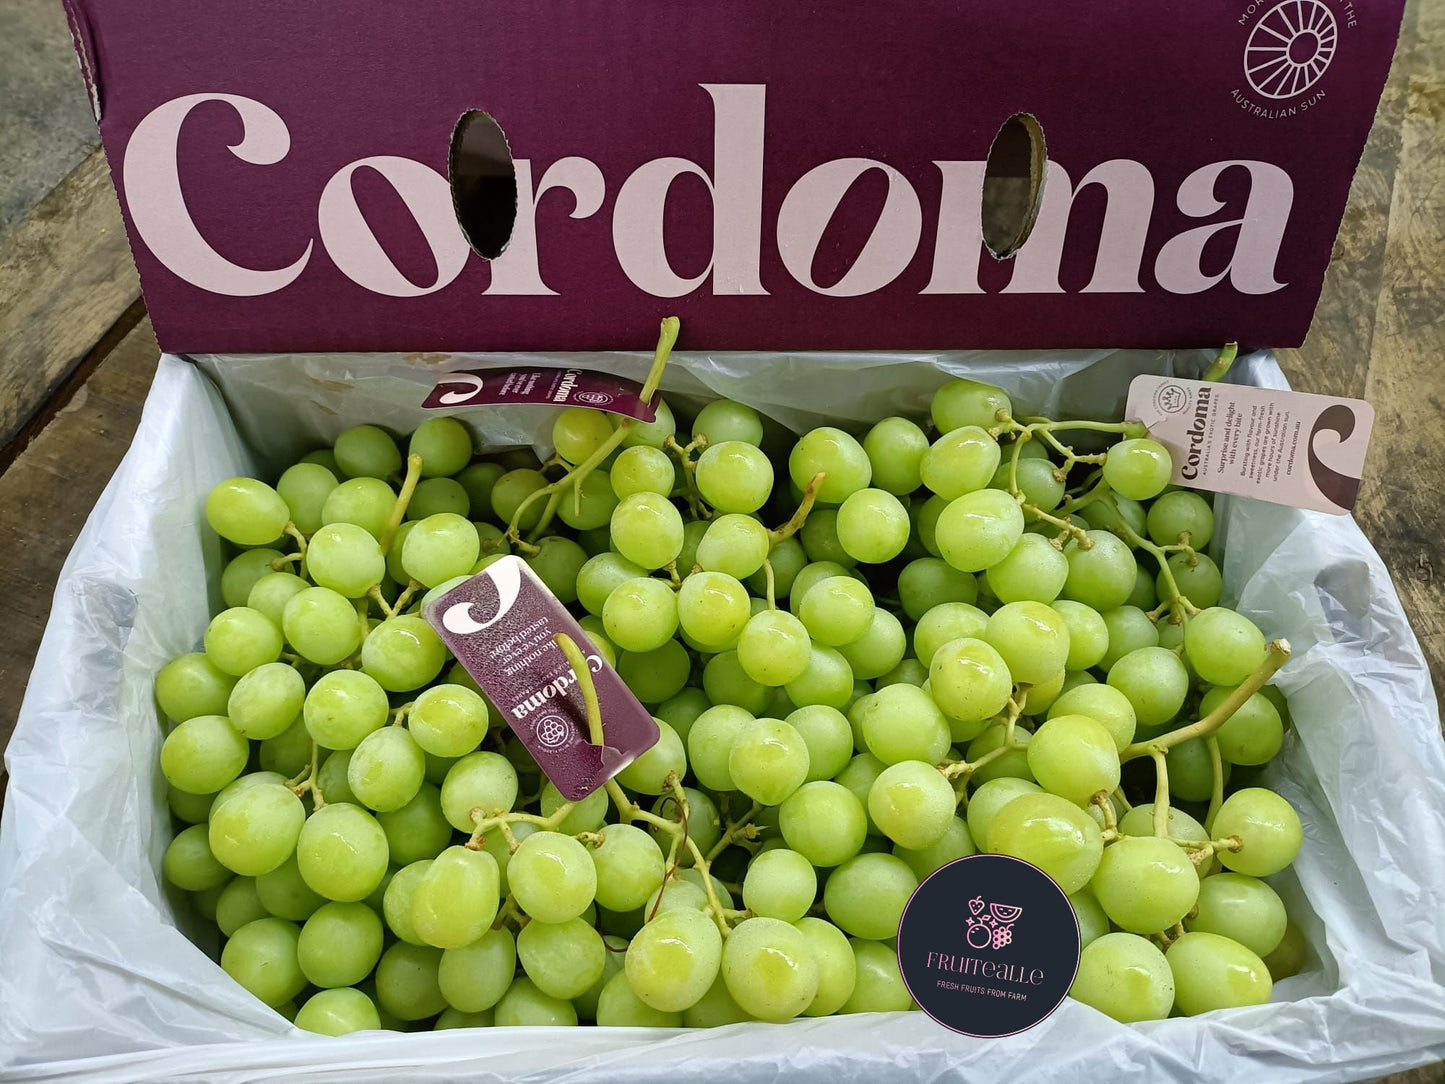 Grapes - Green Seedless [Autumn Crisp] | CORDOMA Orchard